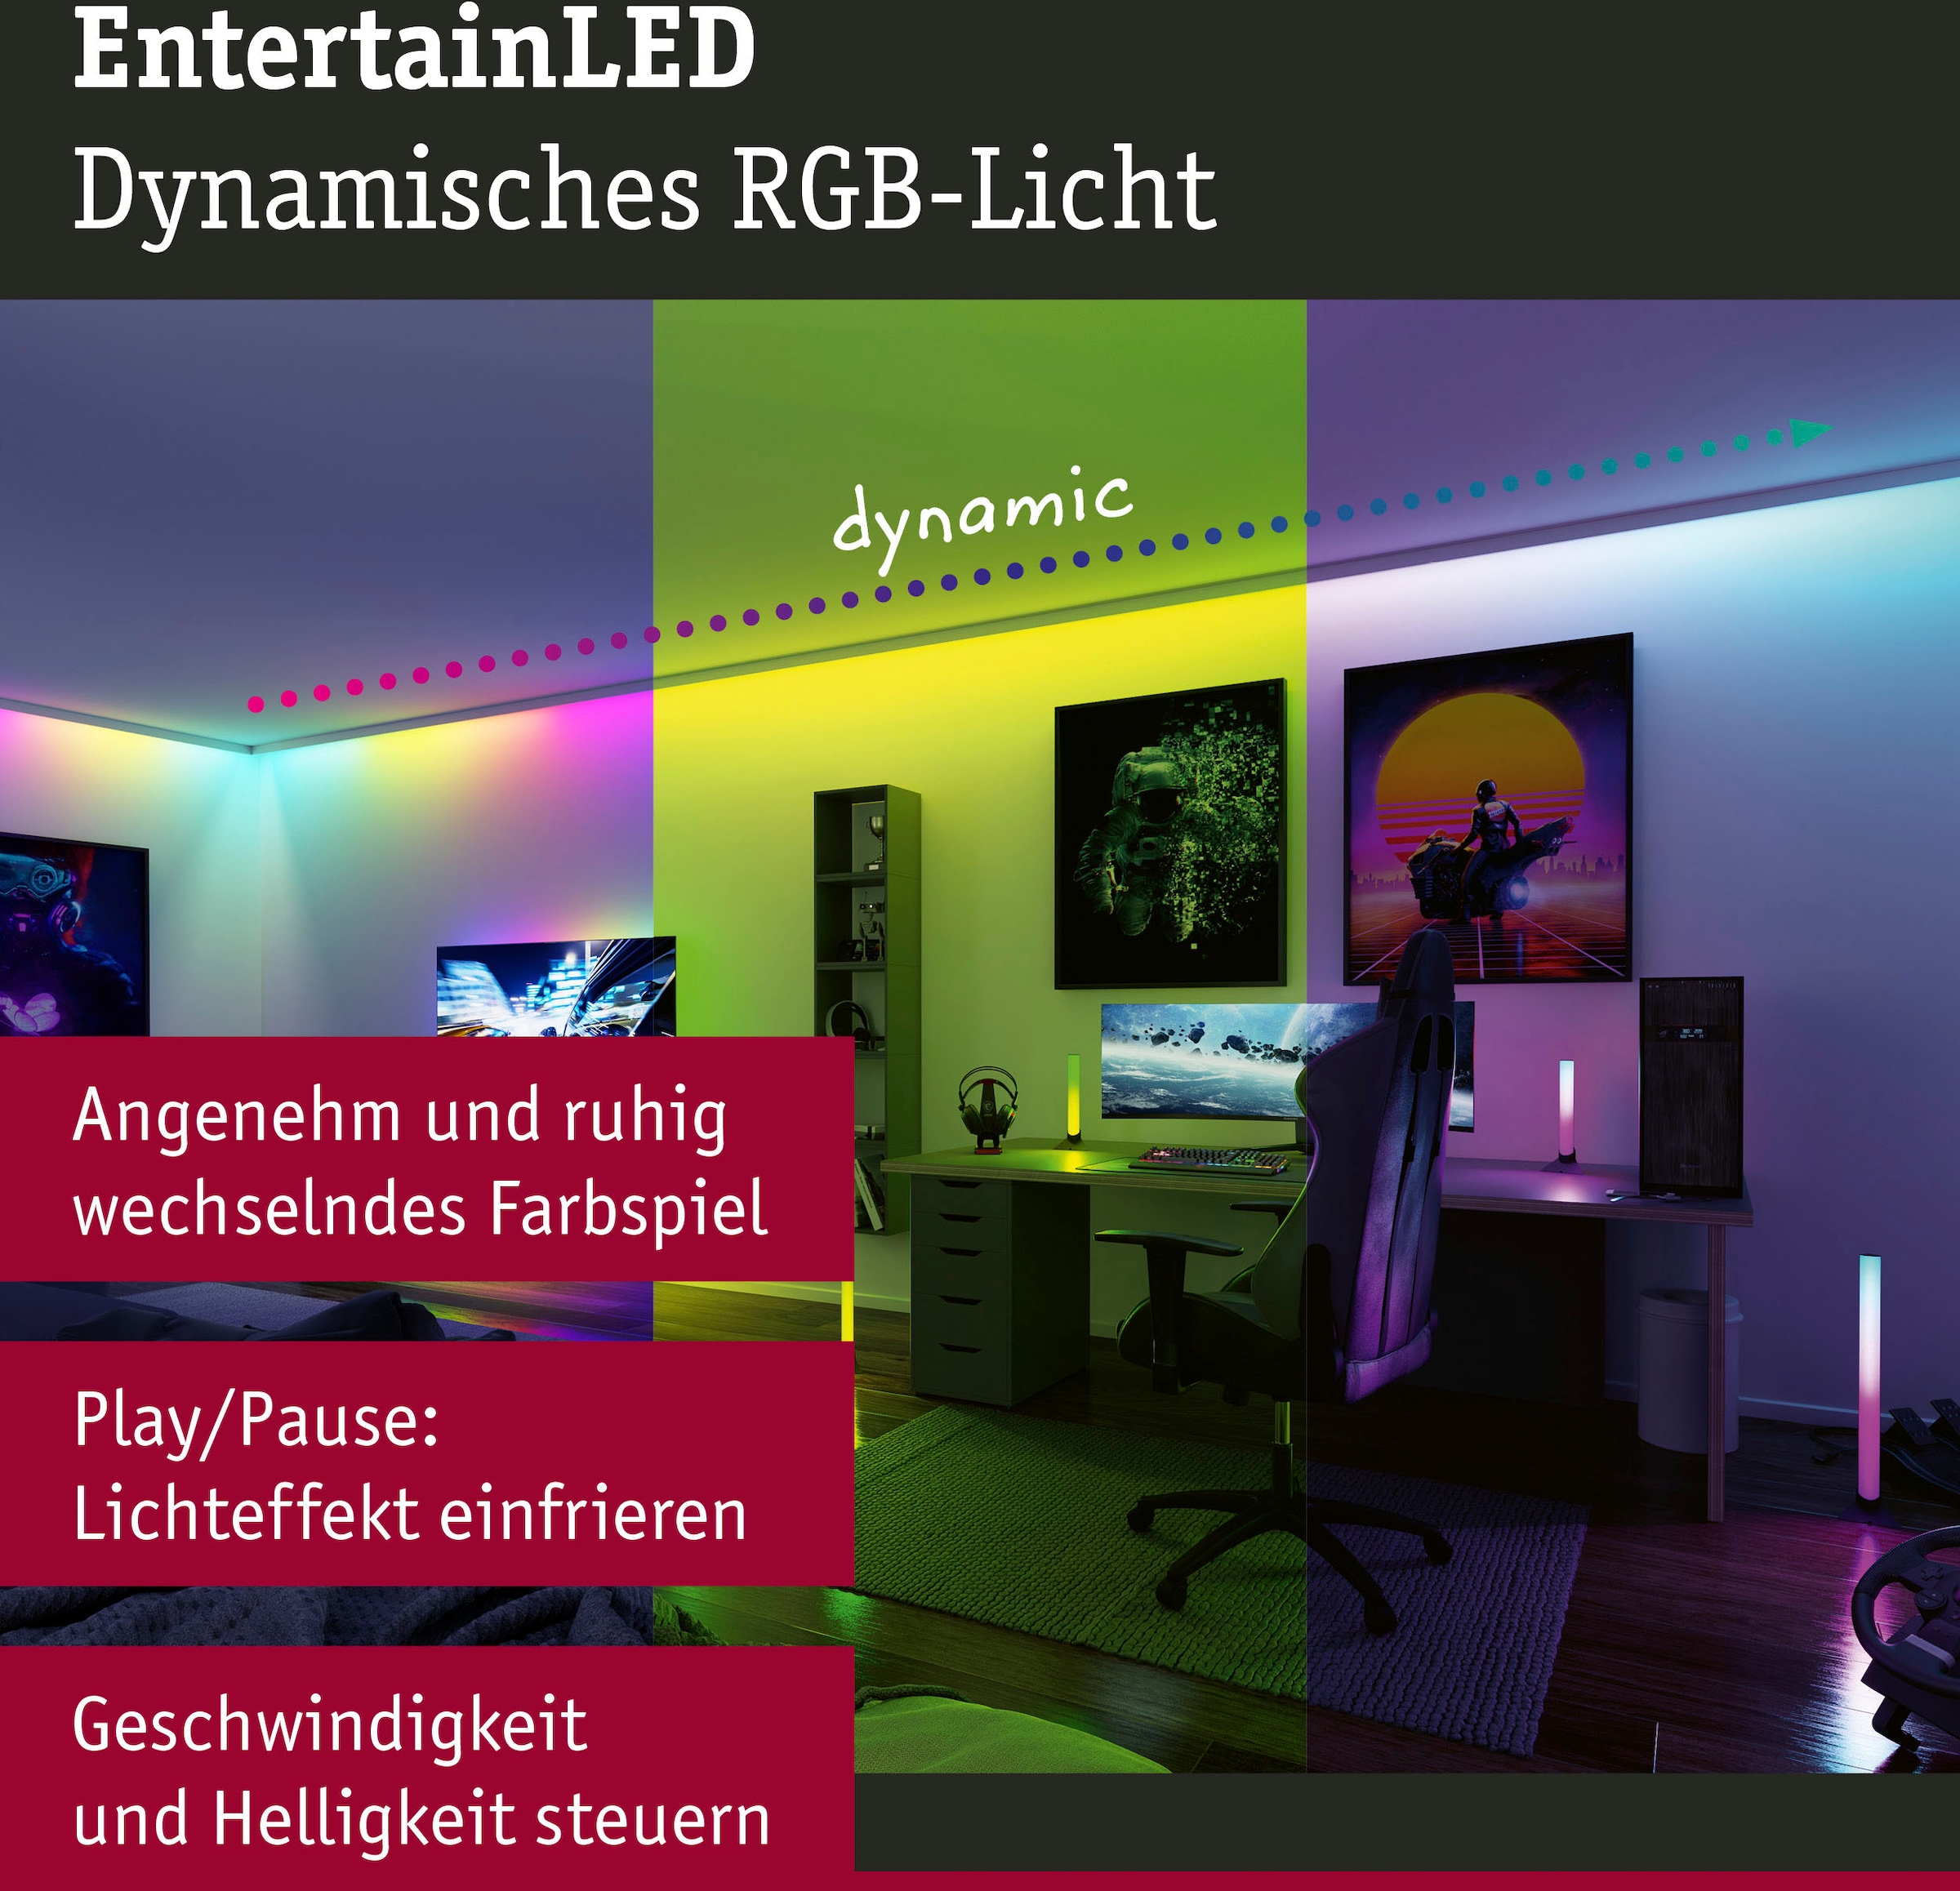 Paulmann LED-Streifen »Dynamic Rainbow RGB 1,5m 3W 60LEDs/m 5VA«, 1 St.-flammig